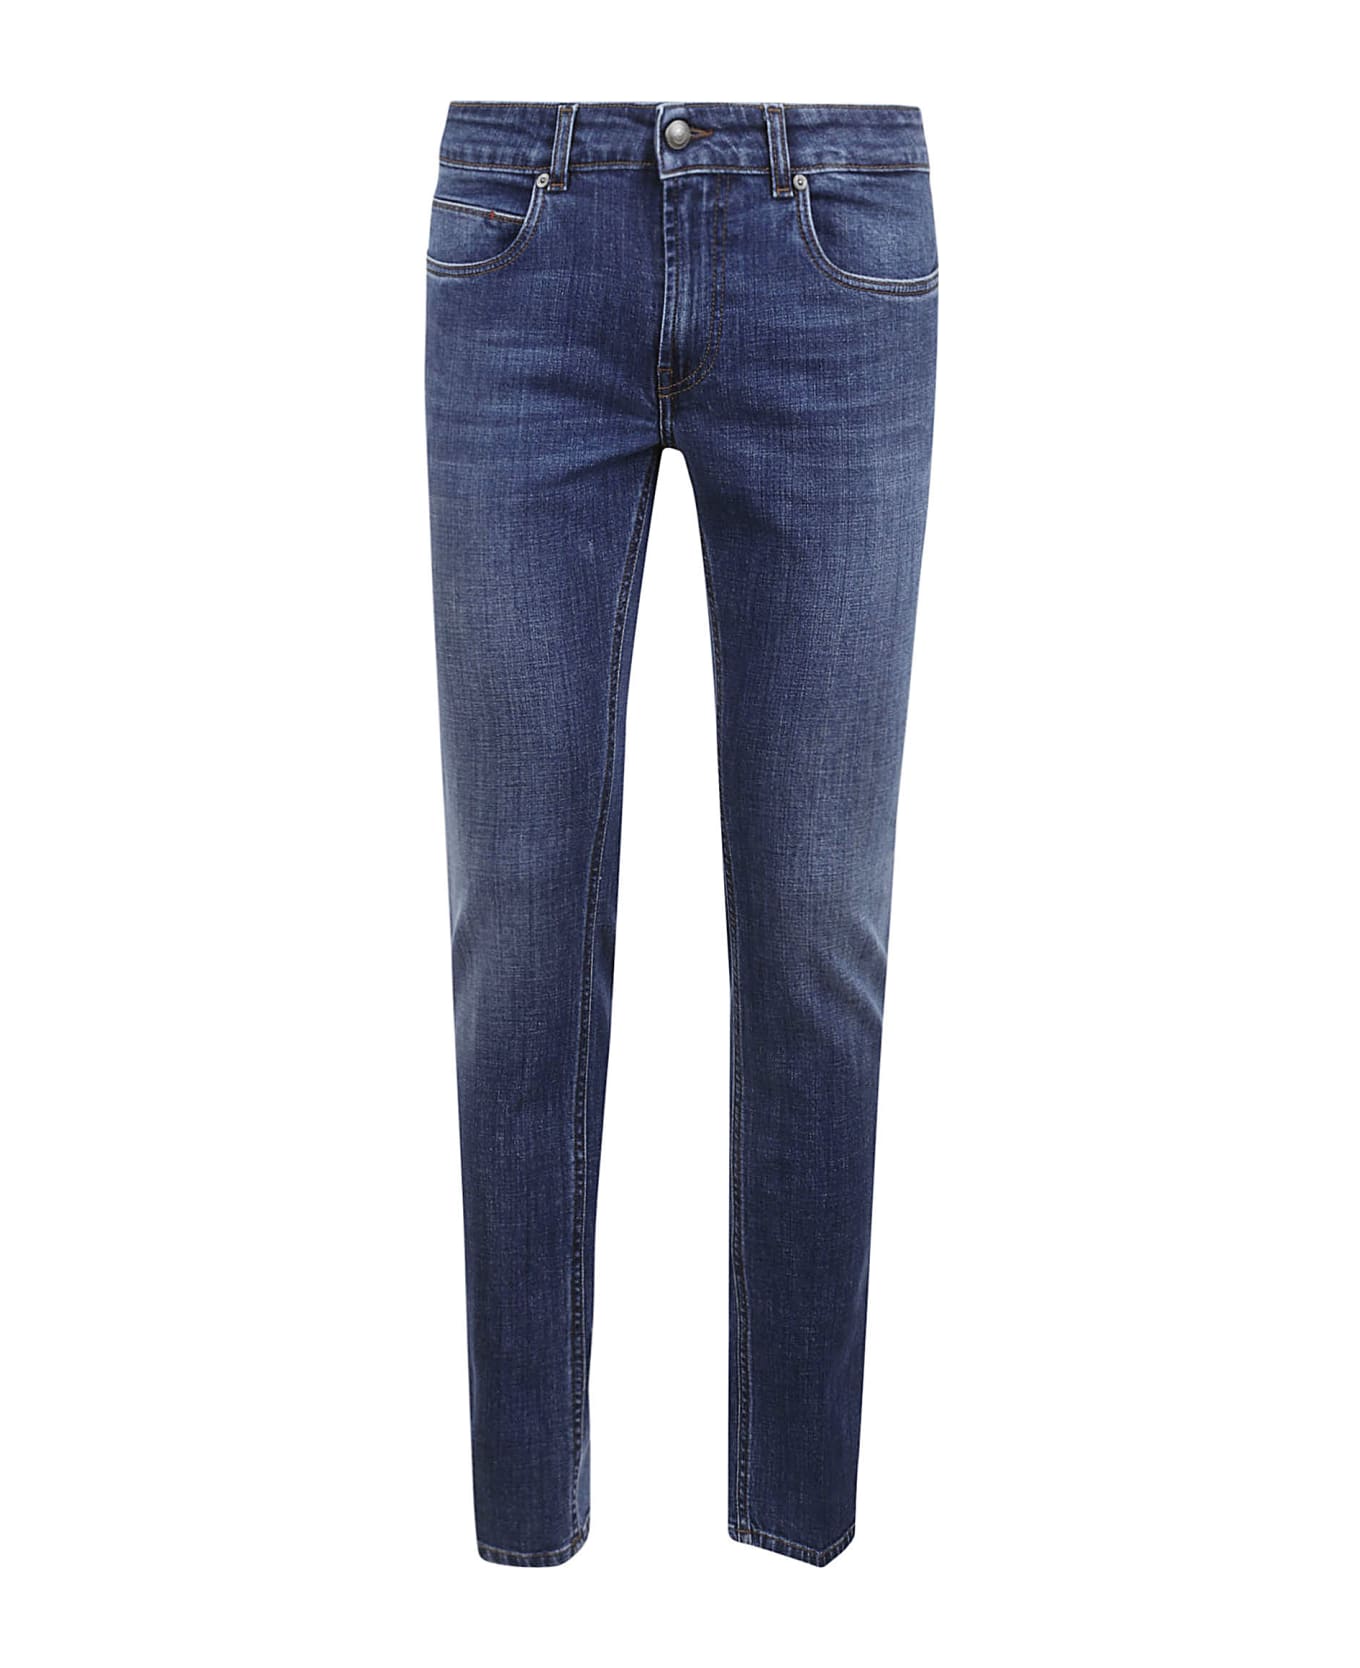 Fay Classic 5 Pockets Jeans - Blue デニム